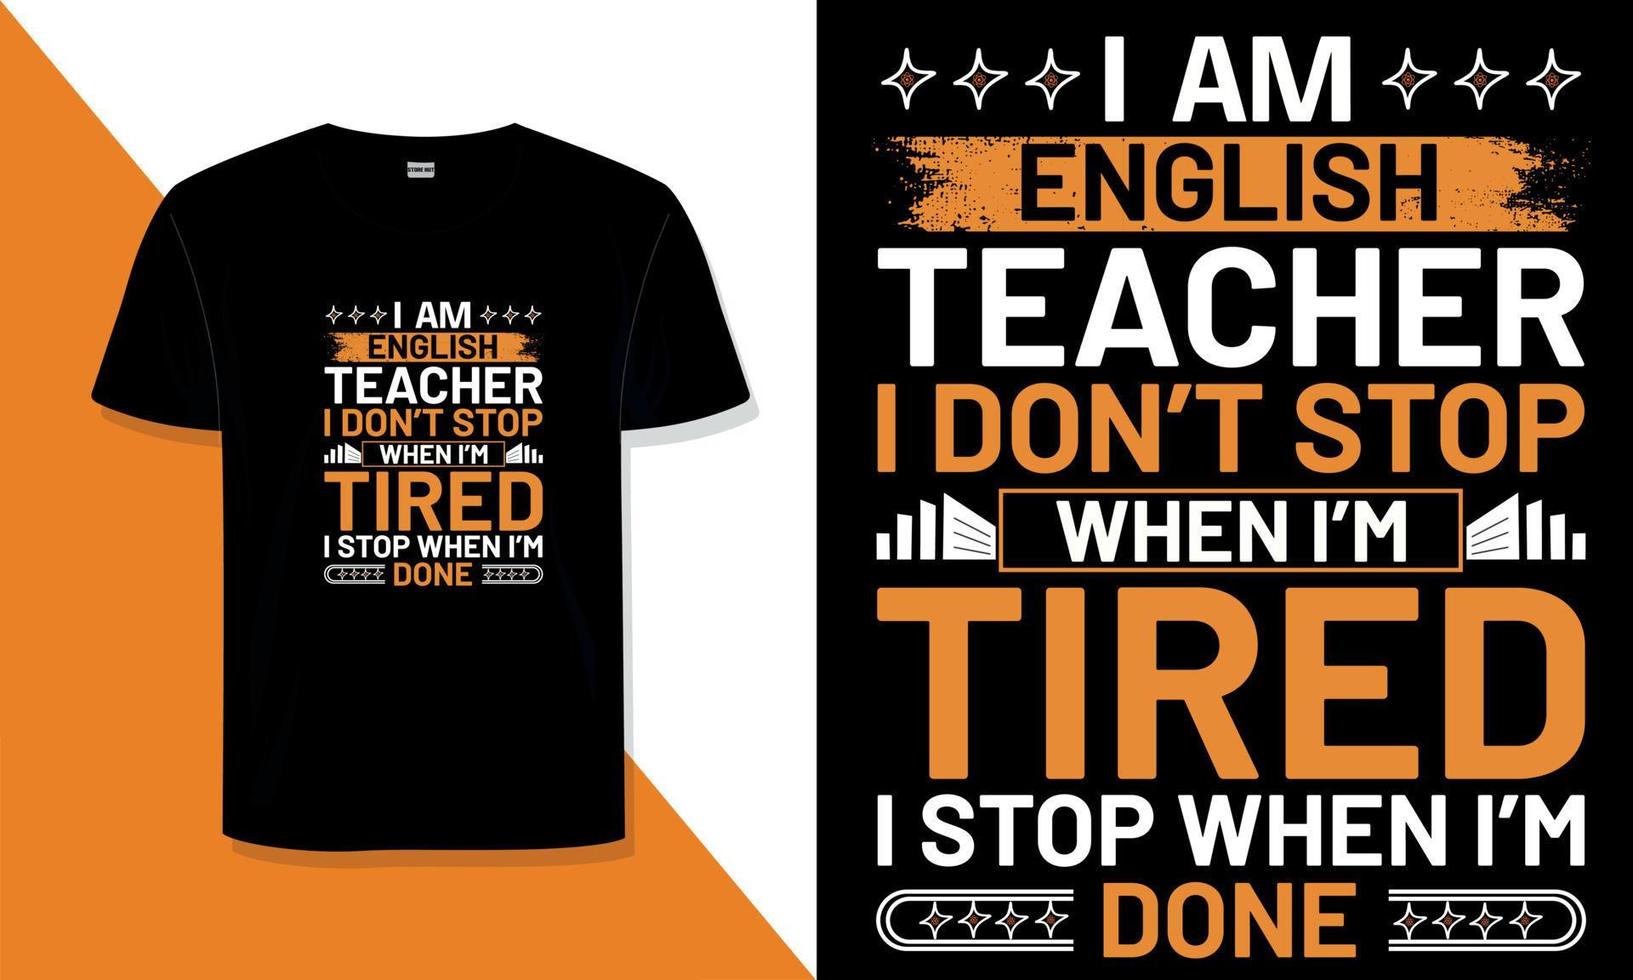 Teacher typography t shirt design vector